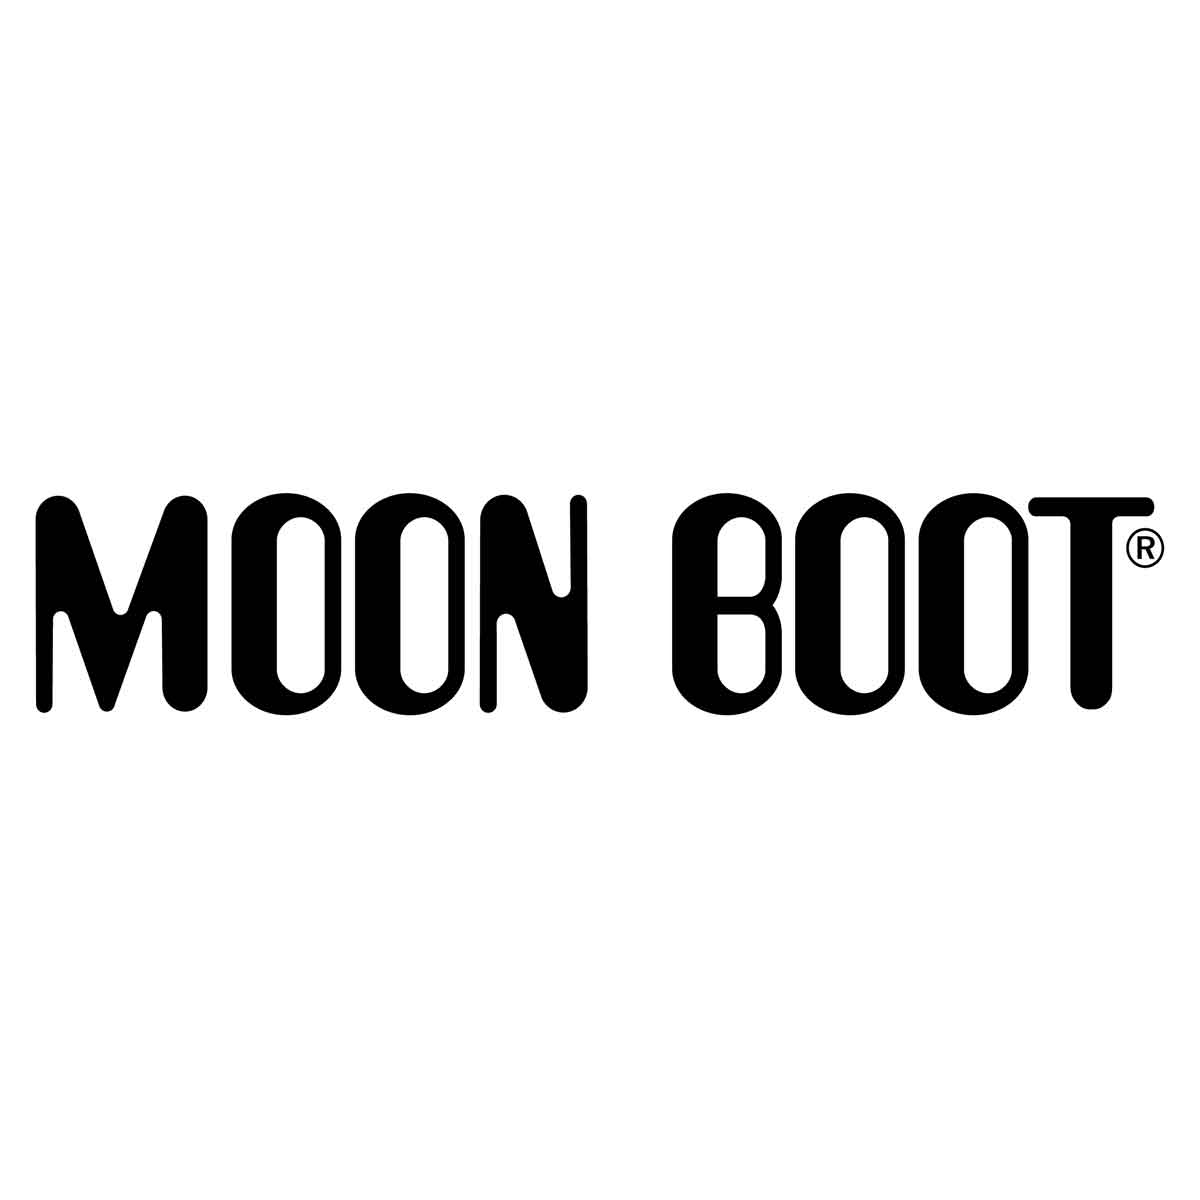 Flash Sale Anmeldung - moon boot